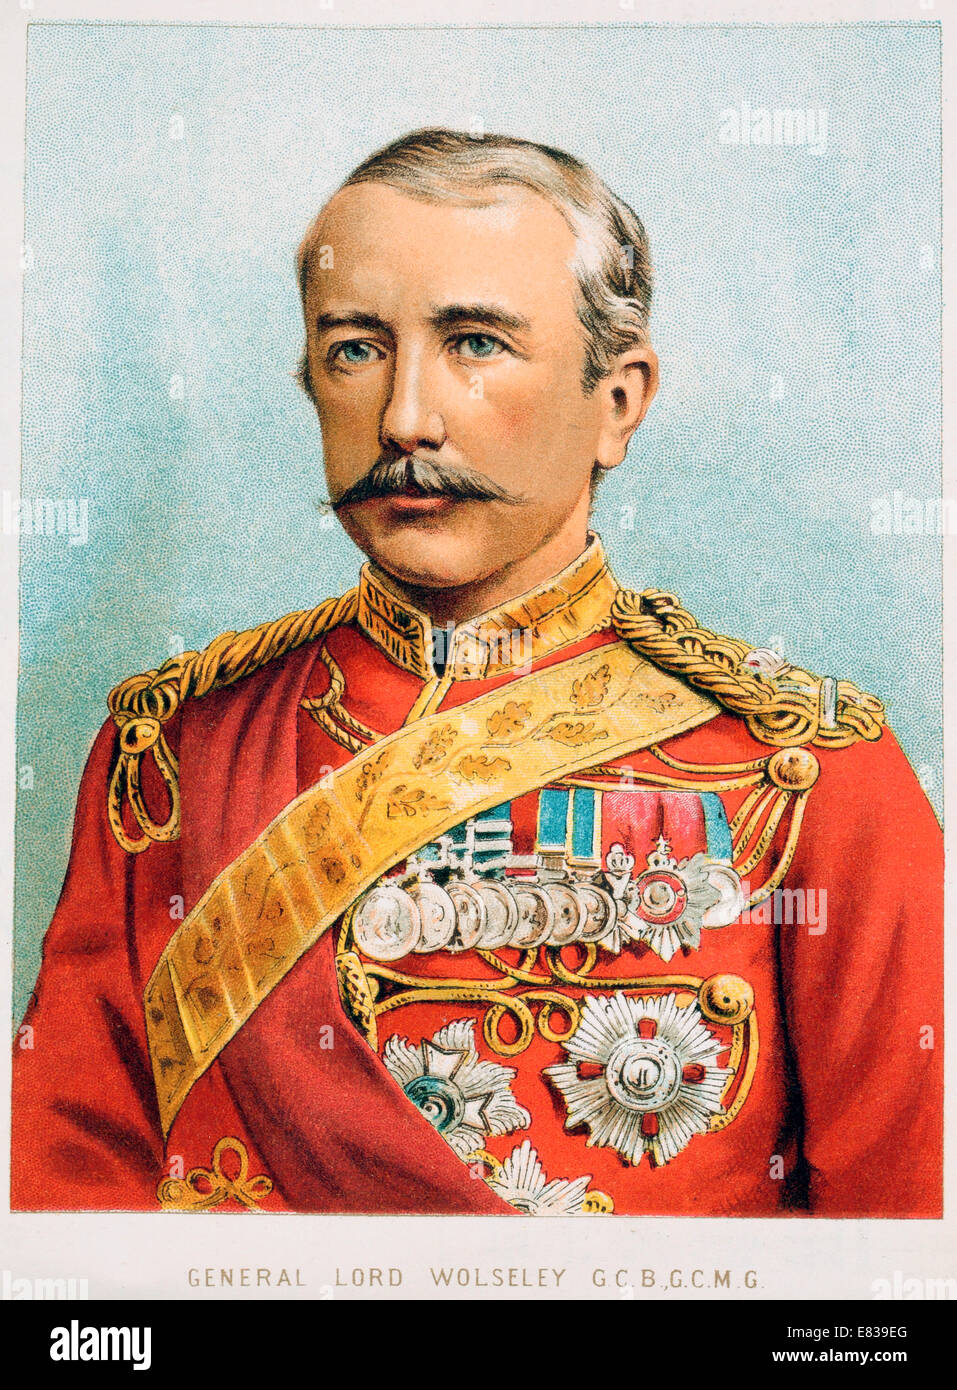 Litografia Signore generale Sir Garnet Wolseley G C B G C M G circa 1885 Foto Stock